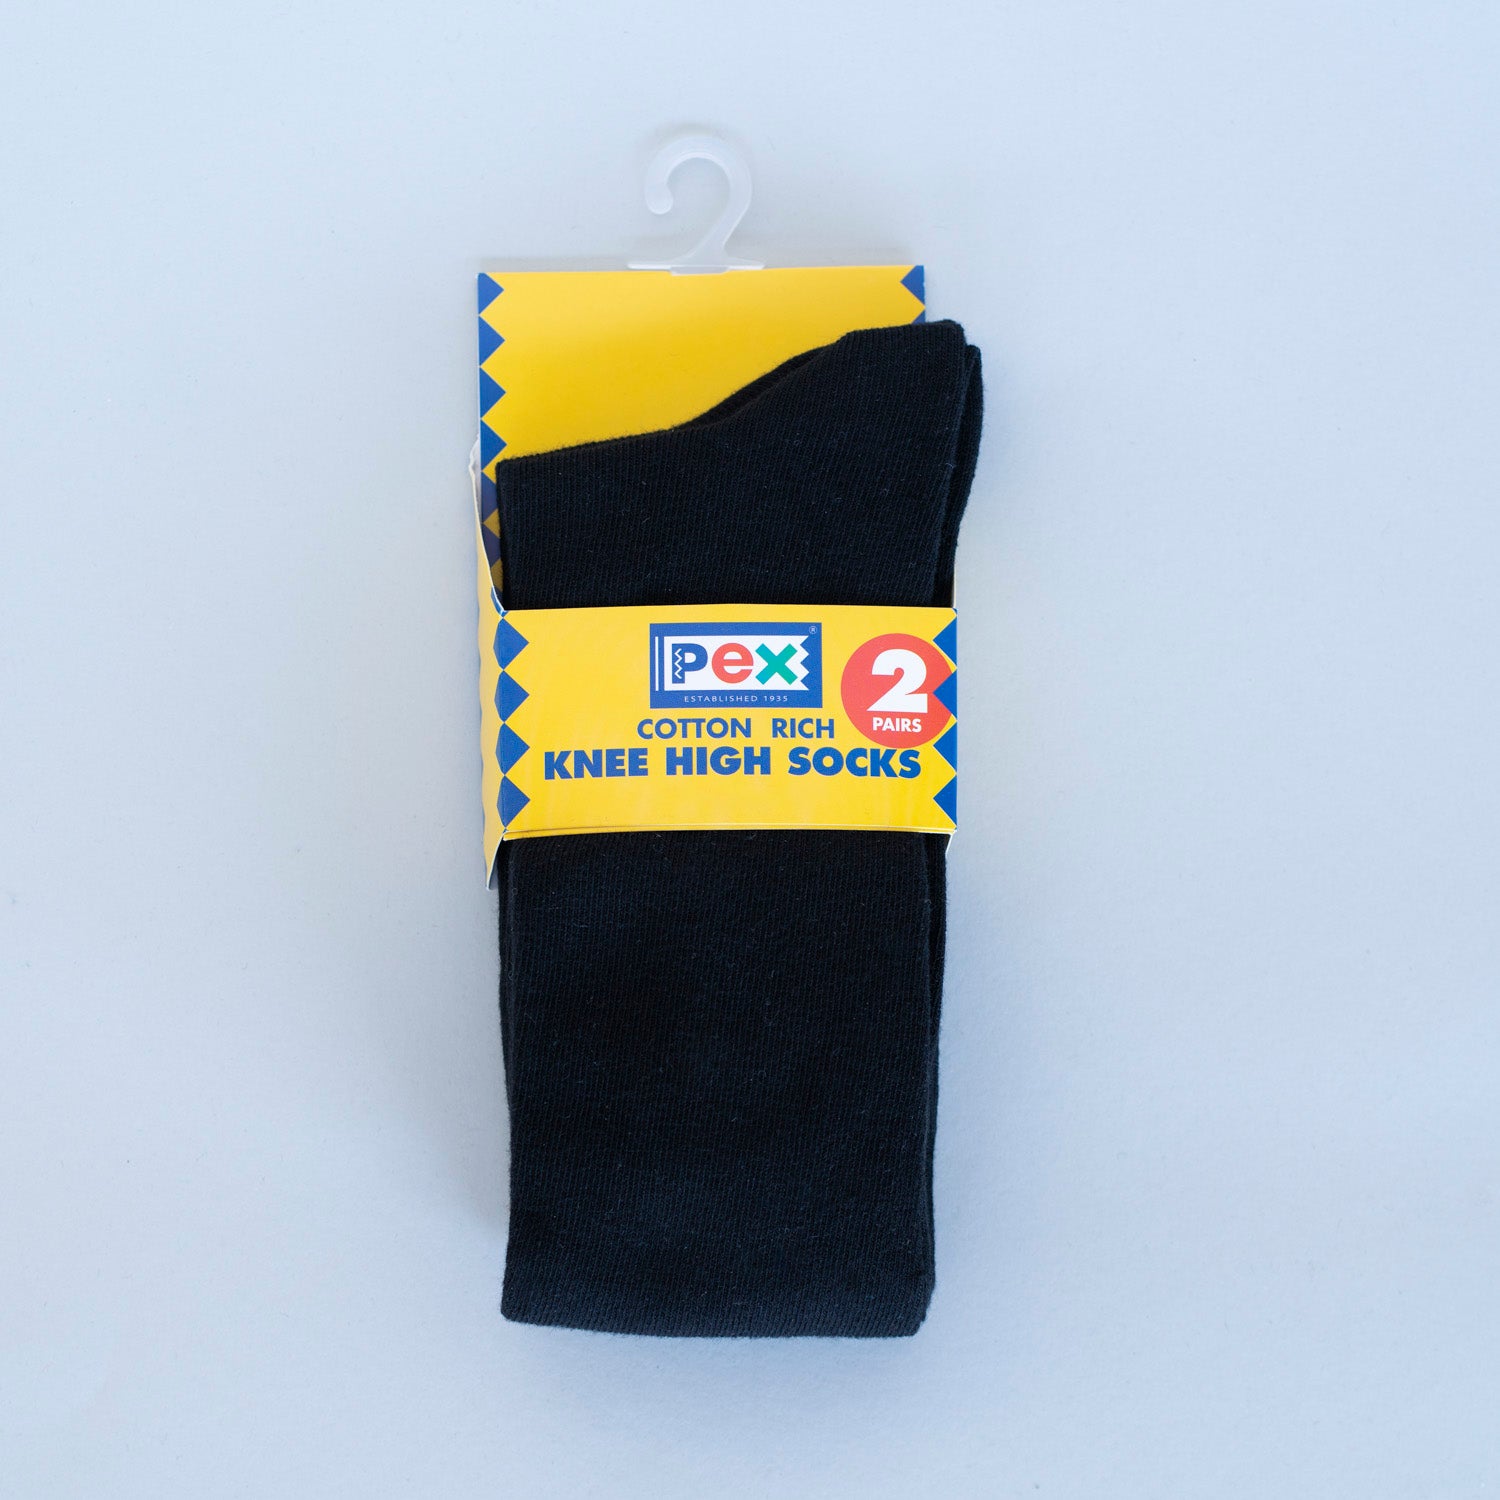 Pex Graduate Socks 2 Pair Pack - Black 1 Shaws Department Stores